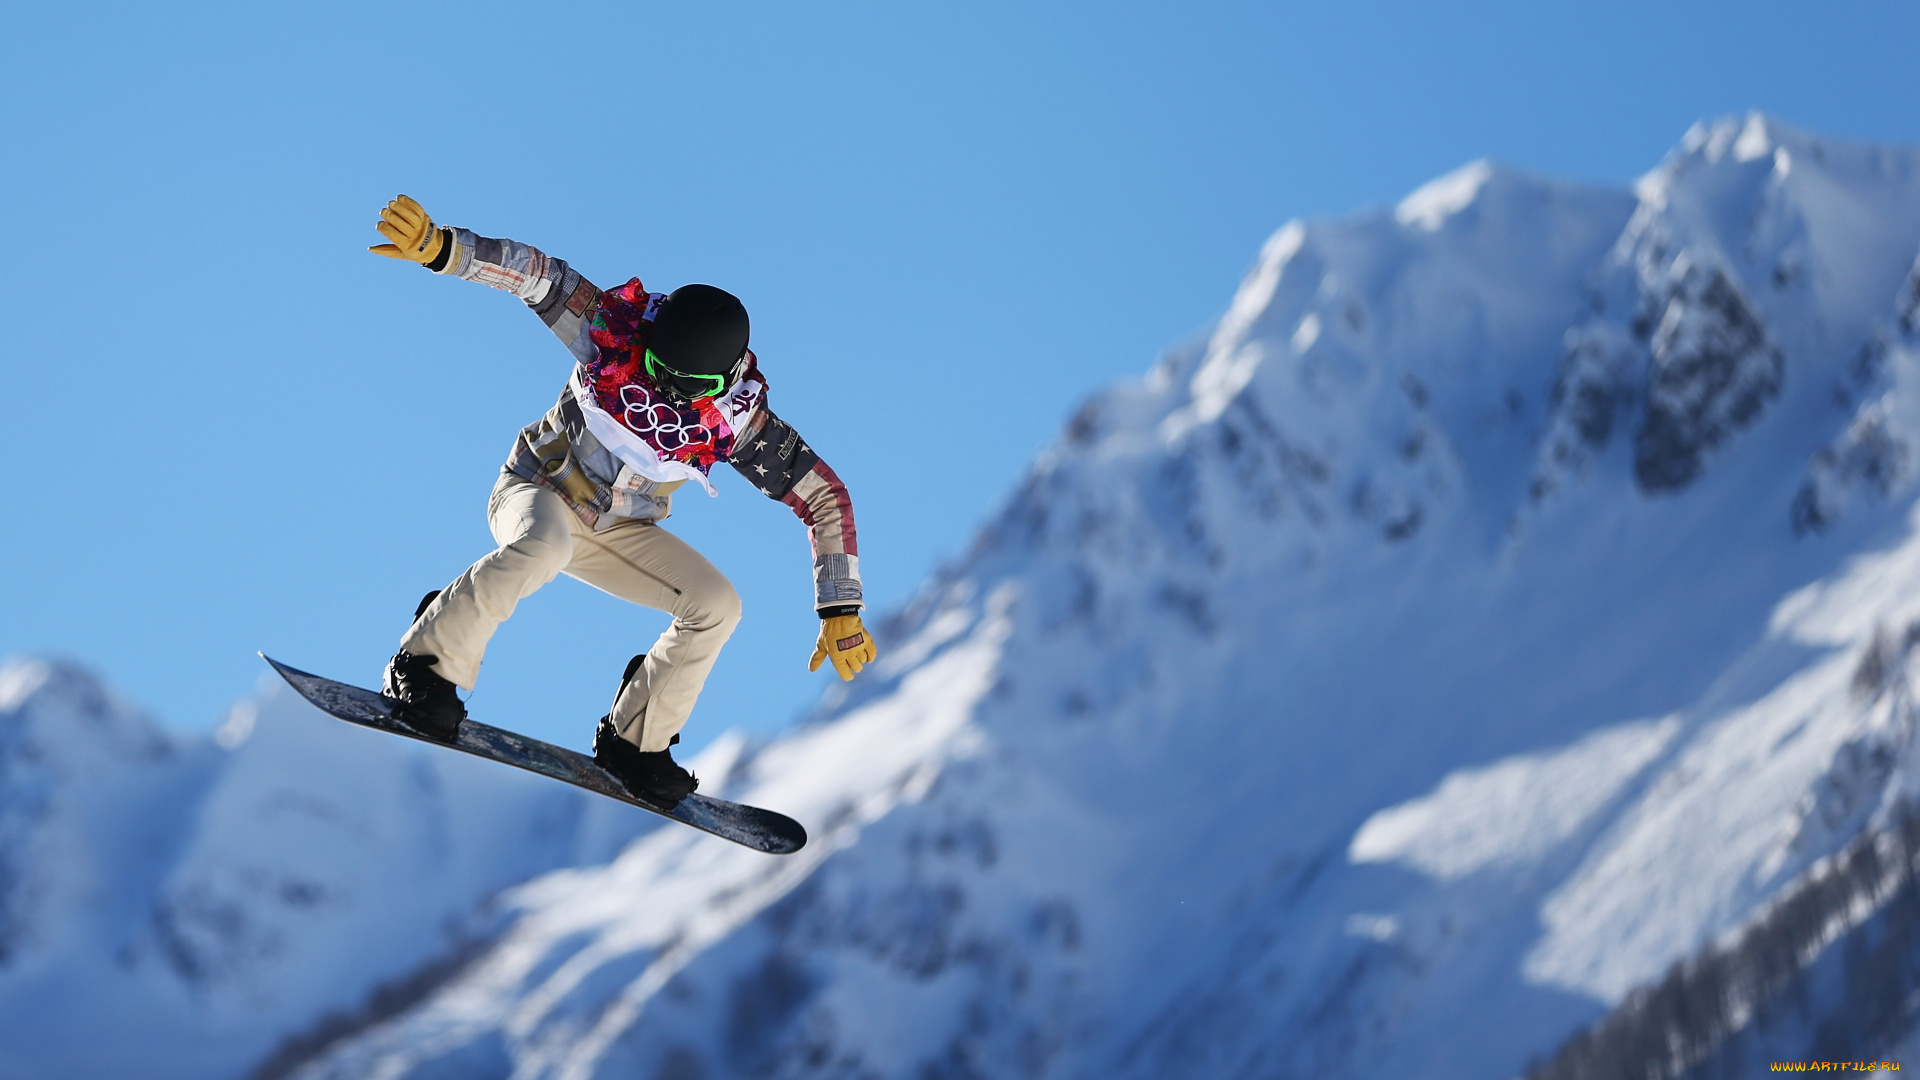 спорт, сноуборд, олимпиада, снег, полет, прыжок, сноубордист, спортсмен, горы, сочи